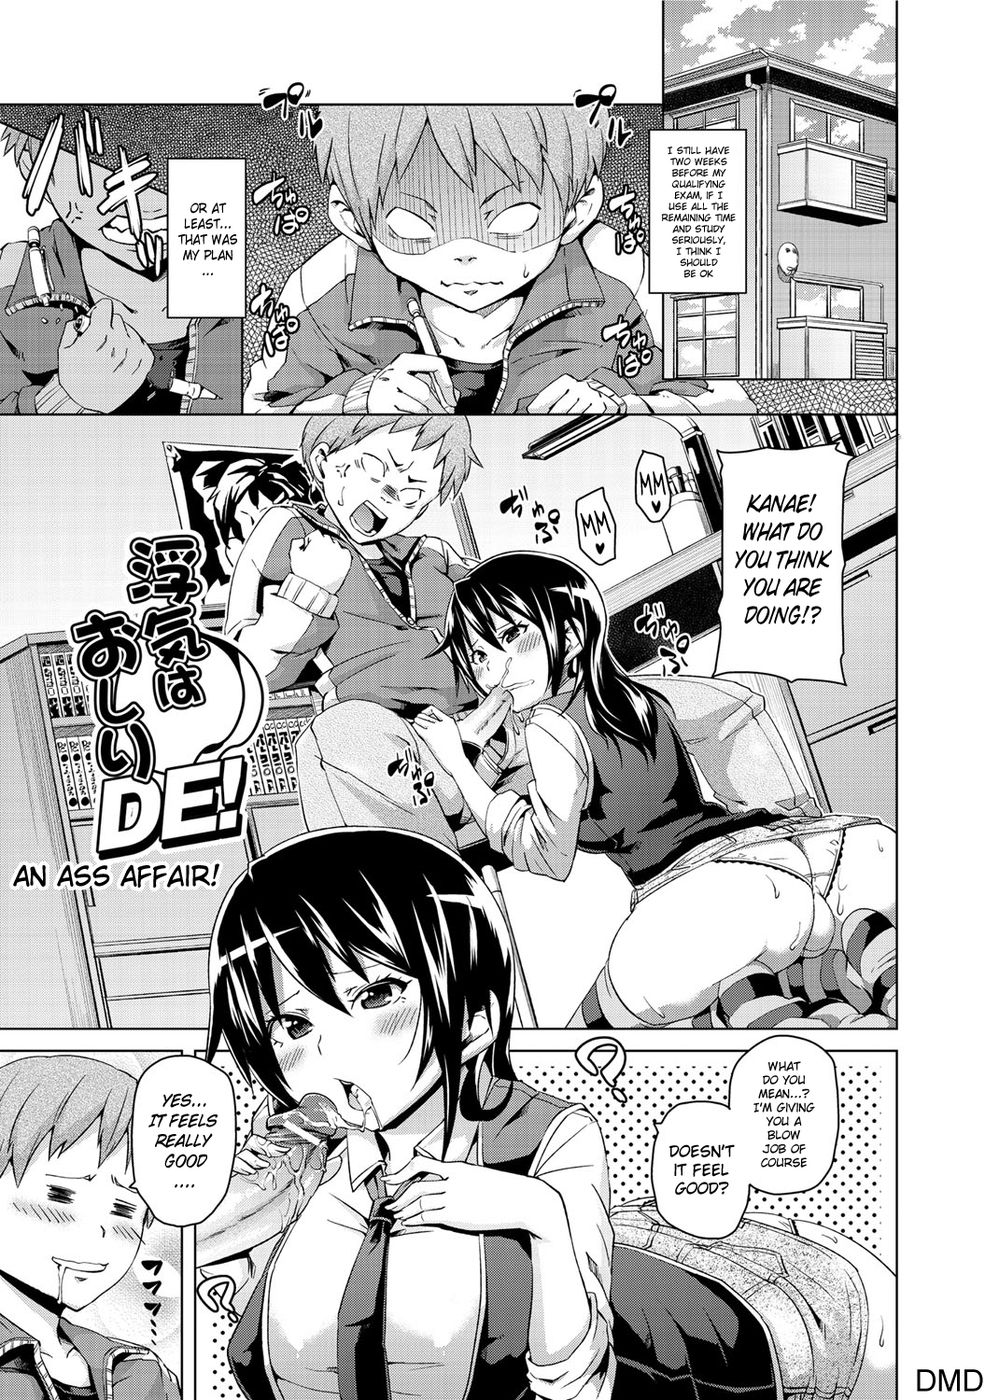 Hentai Manga Comic-An Ass Affair!-Read-1